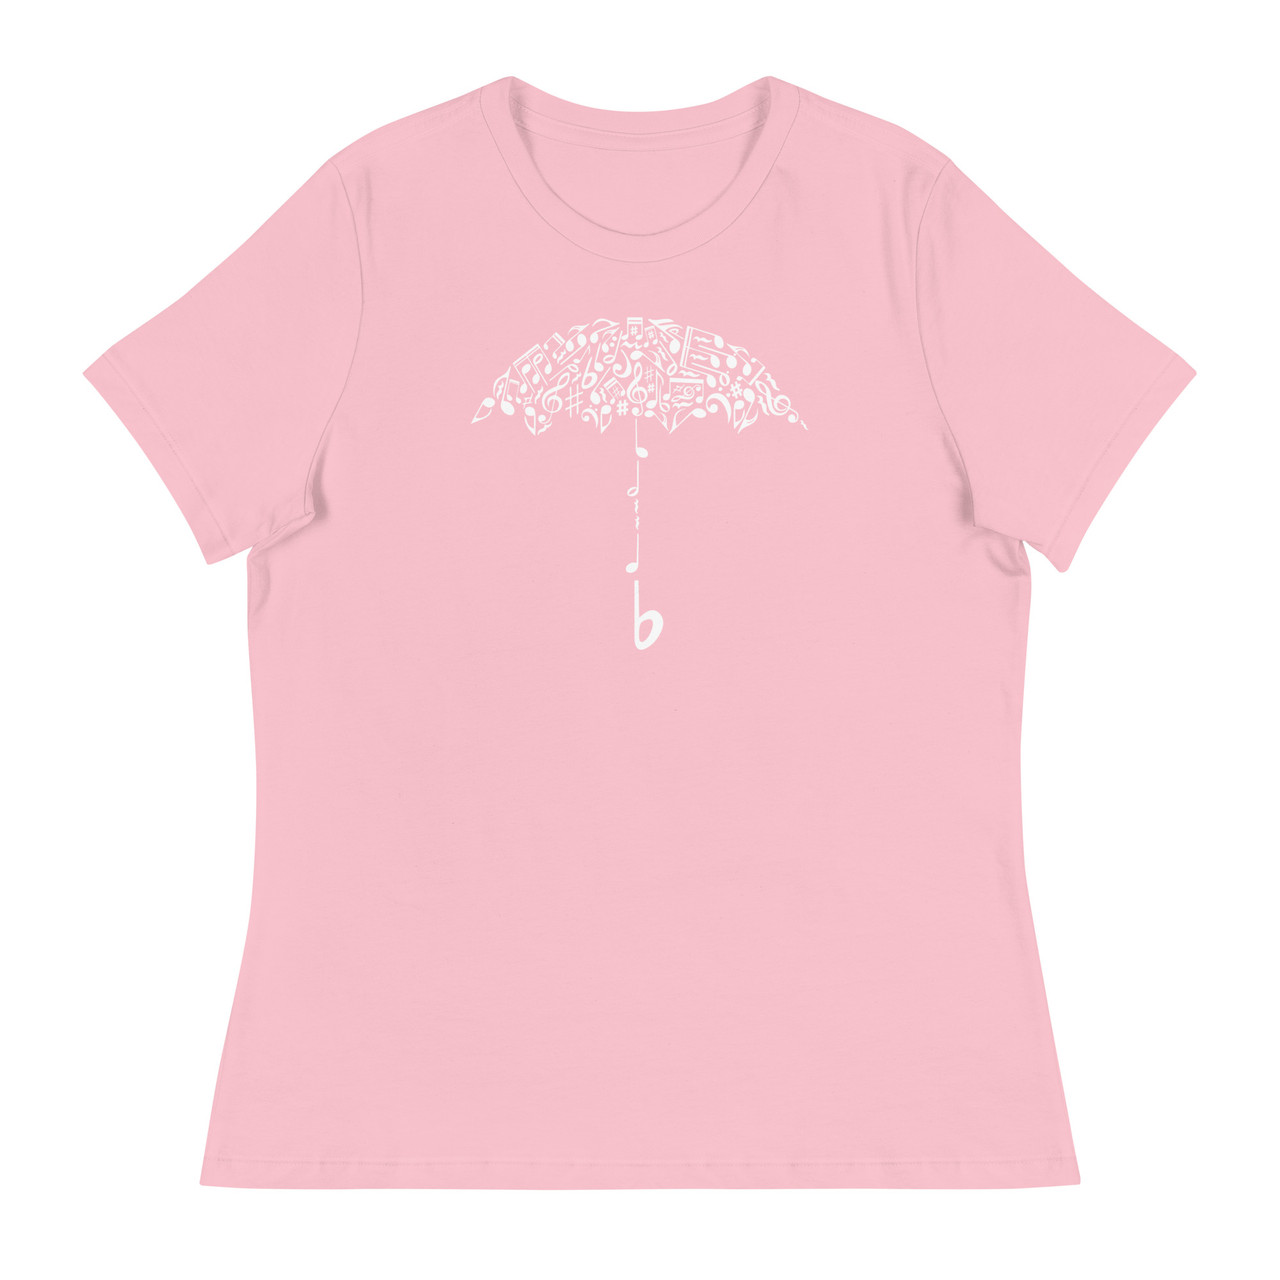 Sound of Rain Women's Relaxed T-Shirt - Bella + Canvas 6400 